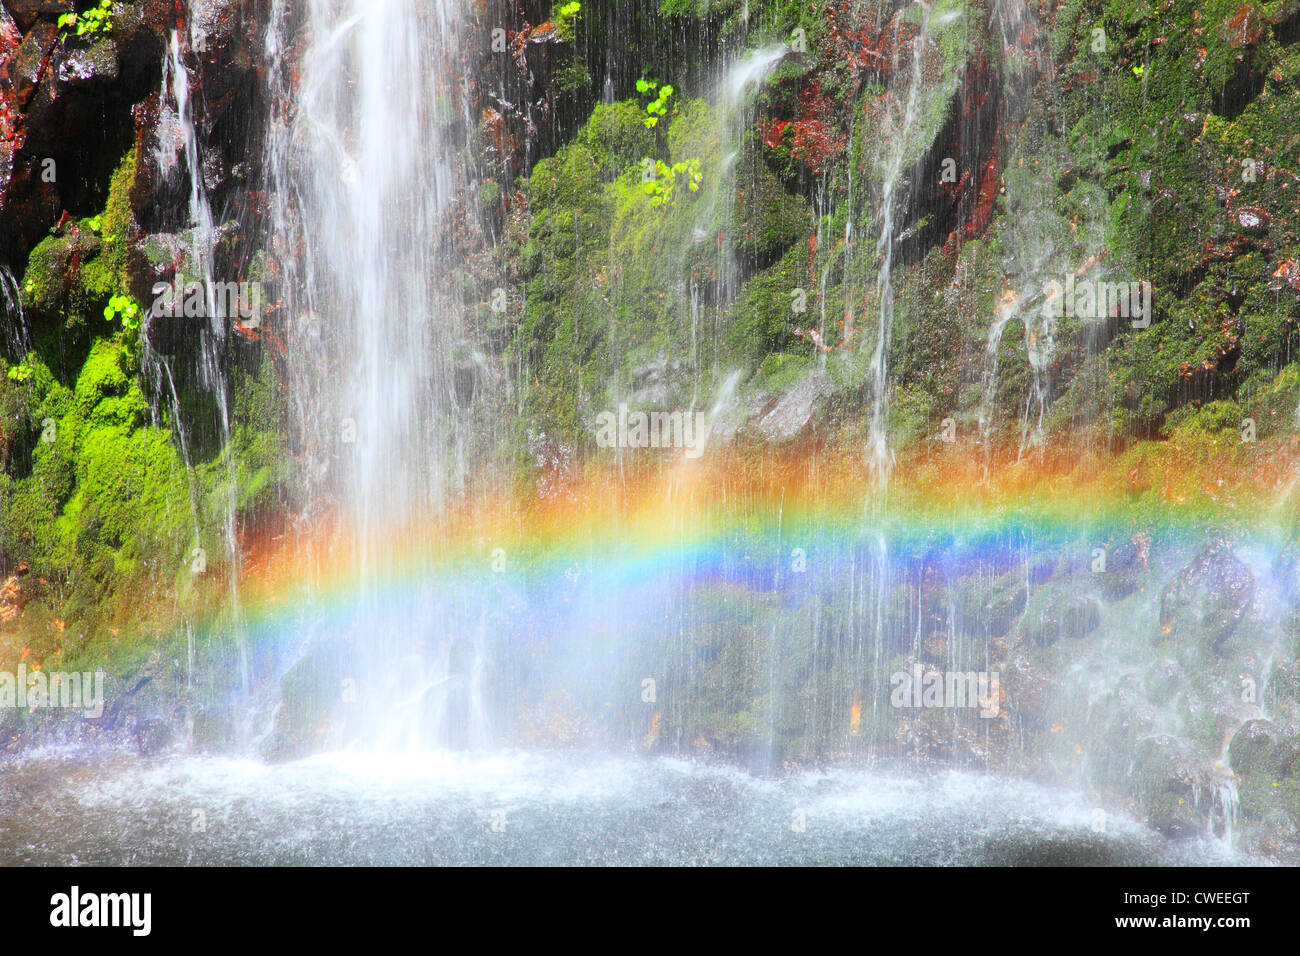 Rainbow e cascate, Moss rocce coperte Foto Stock